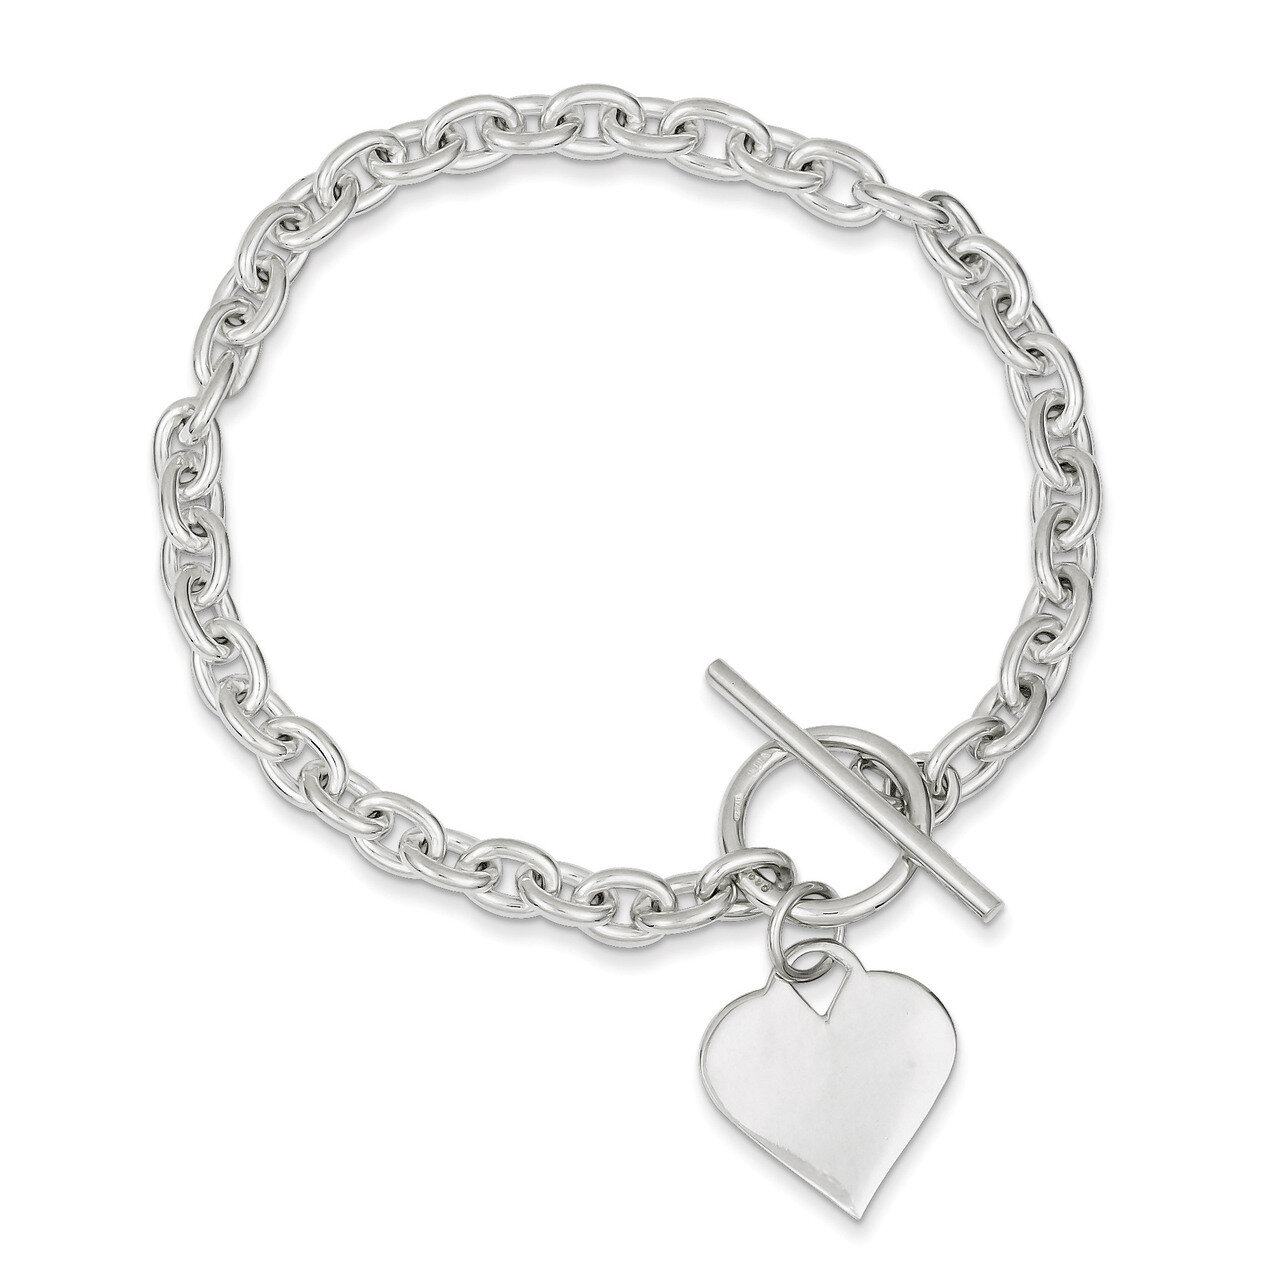 8 Inch Heart Toggle Bracelet Sterling Silver QG2170-8